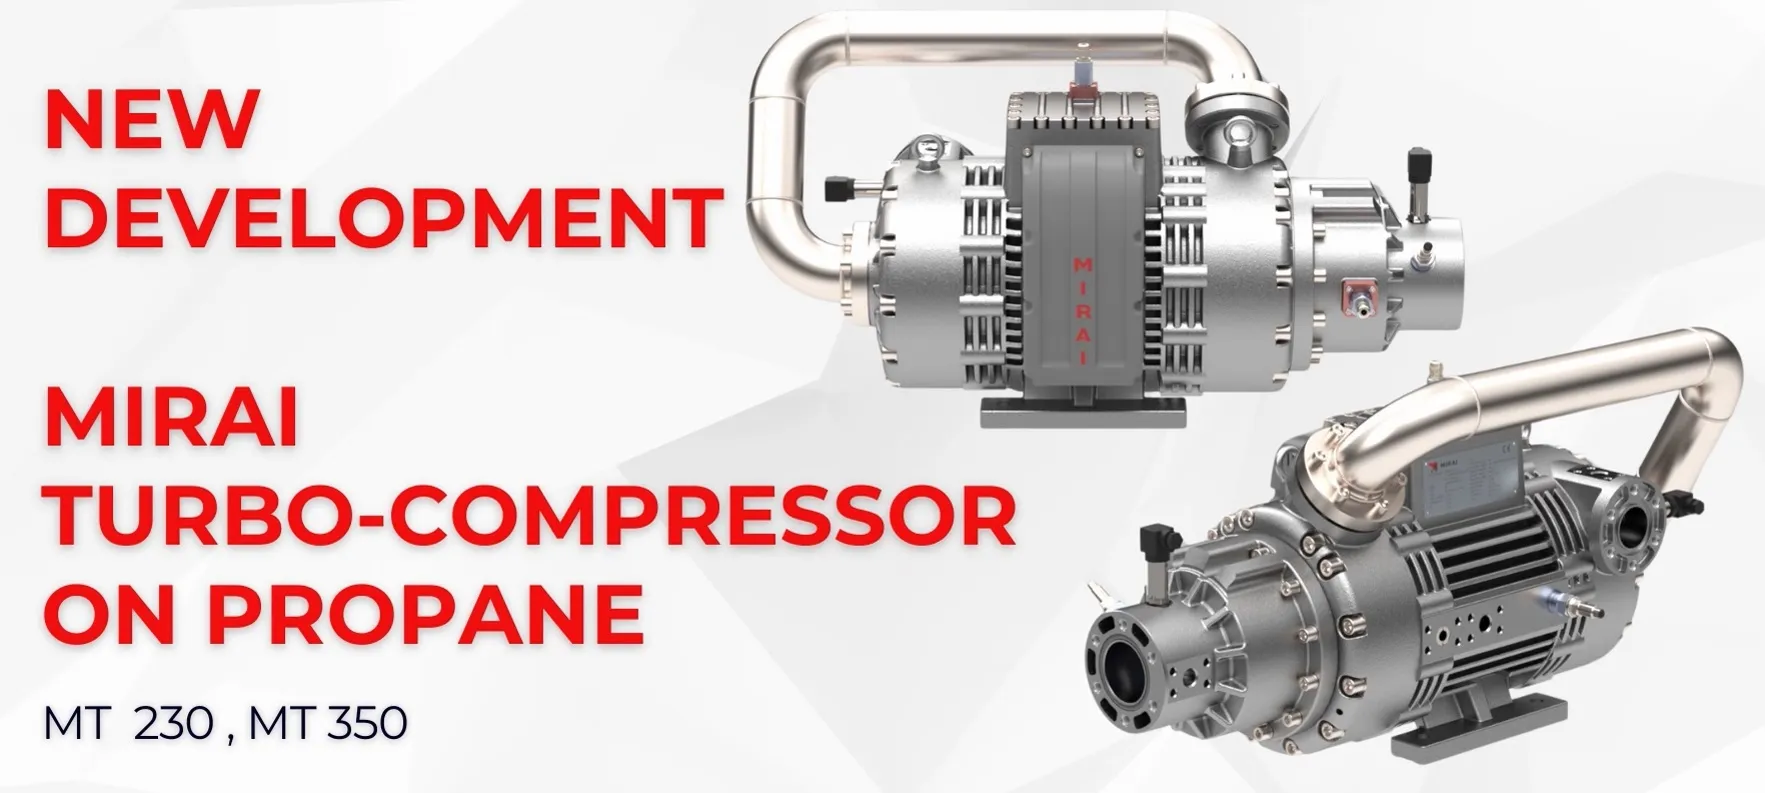 MIRAI Intex Completes Stress Testing of World's First Propane Turbo Compressor